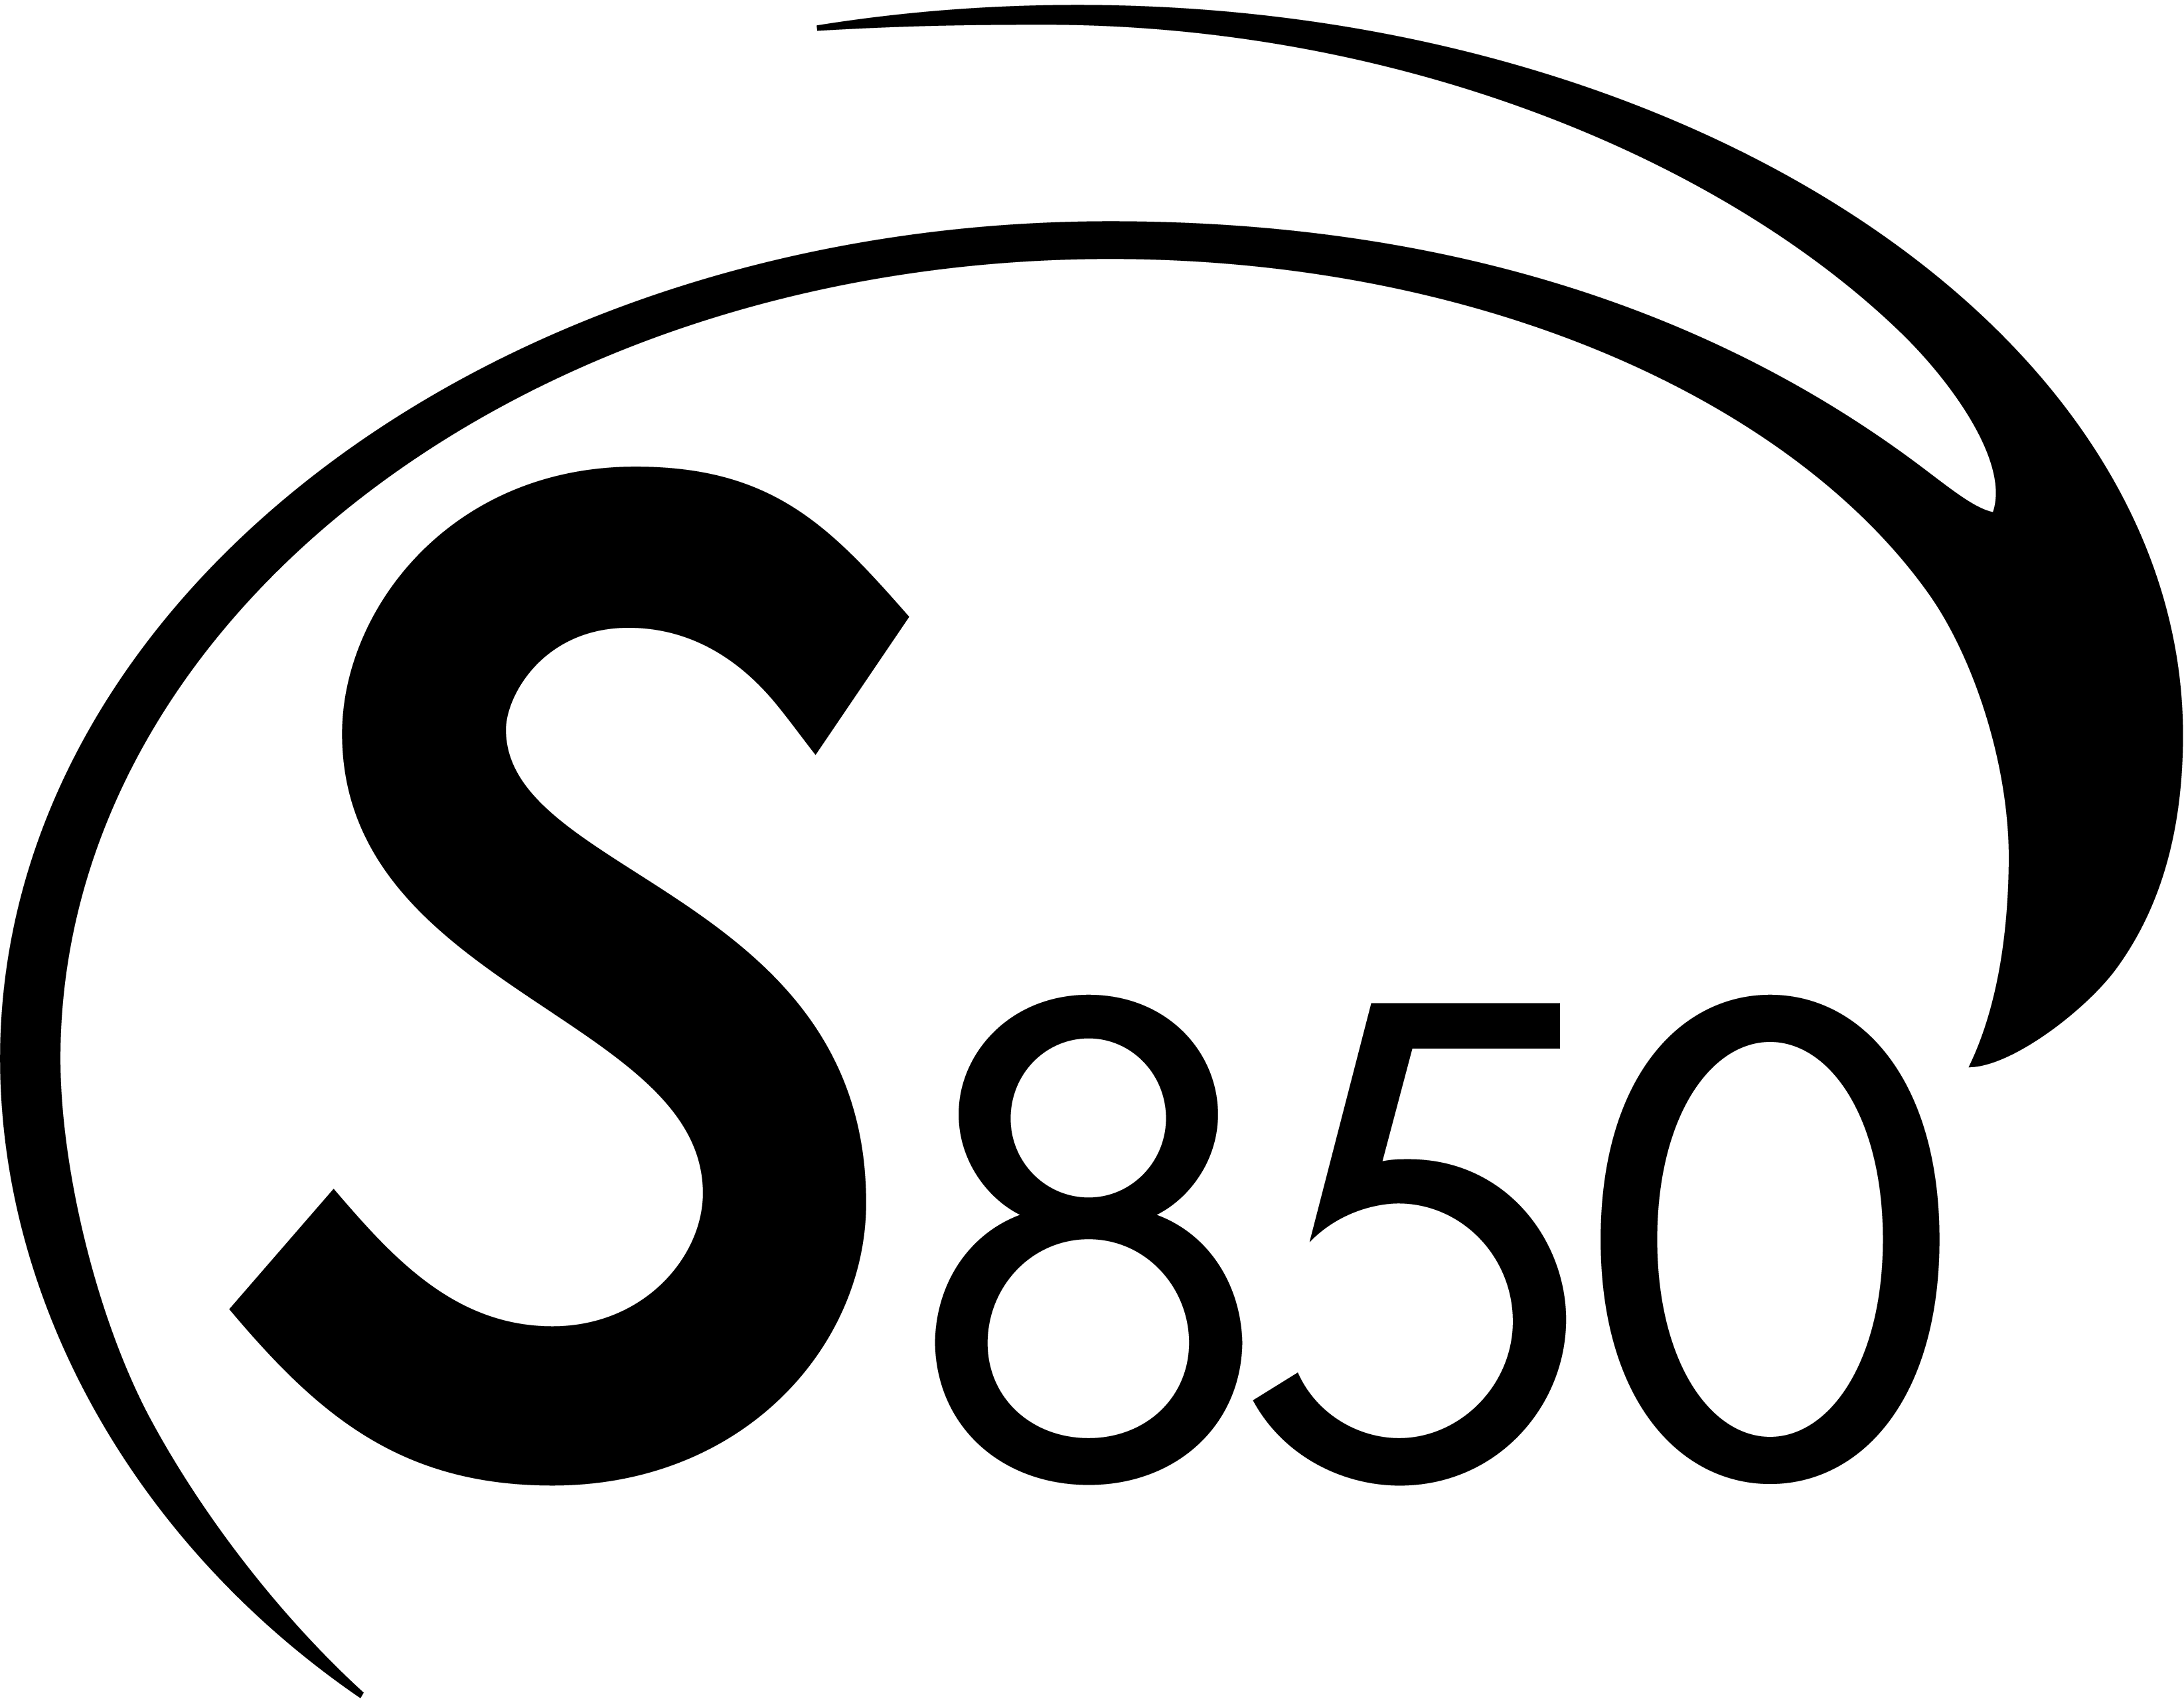 S850-Logo.png